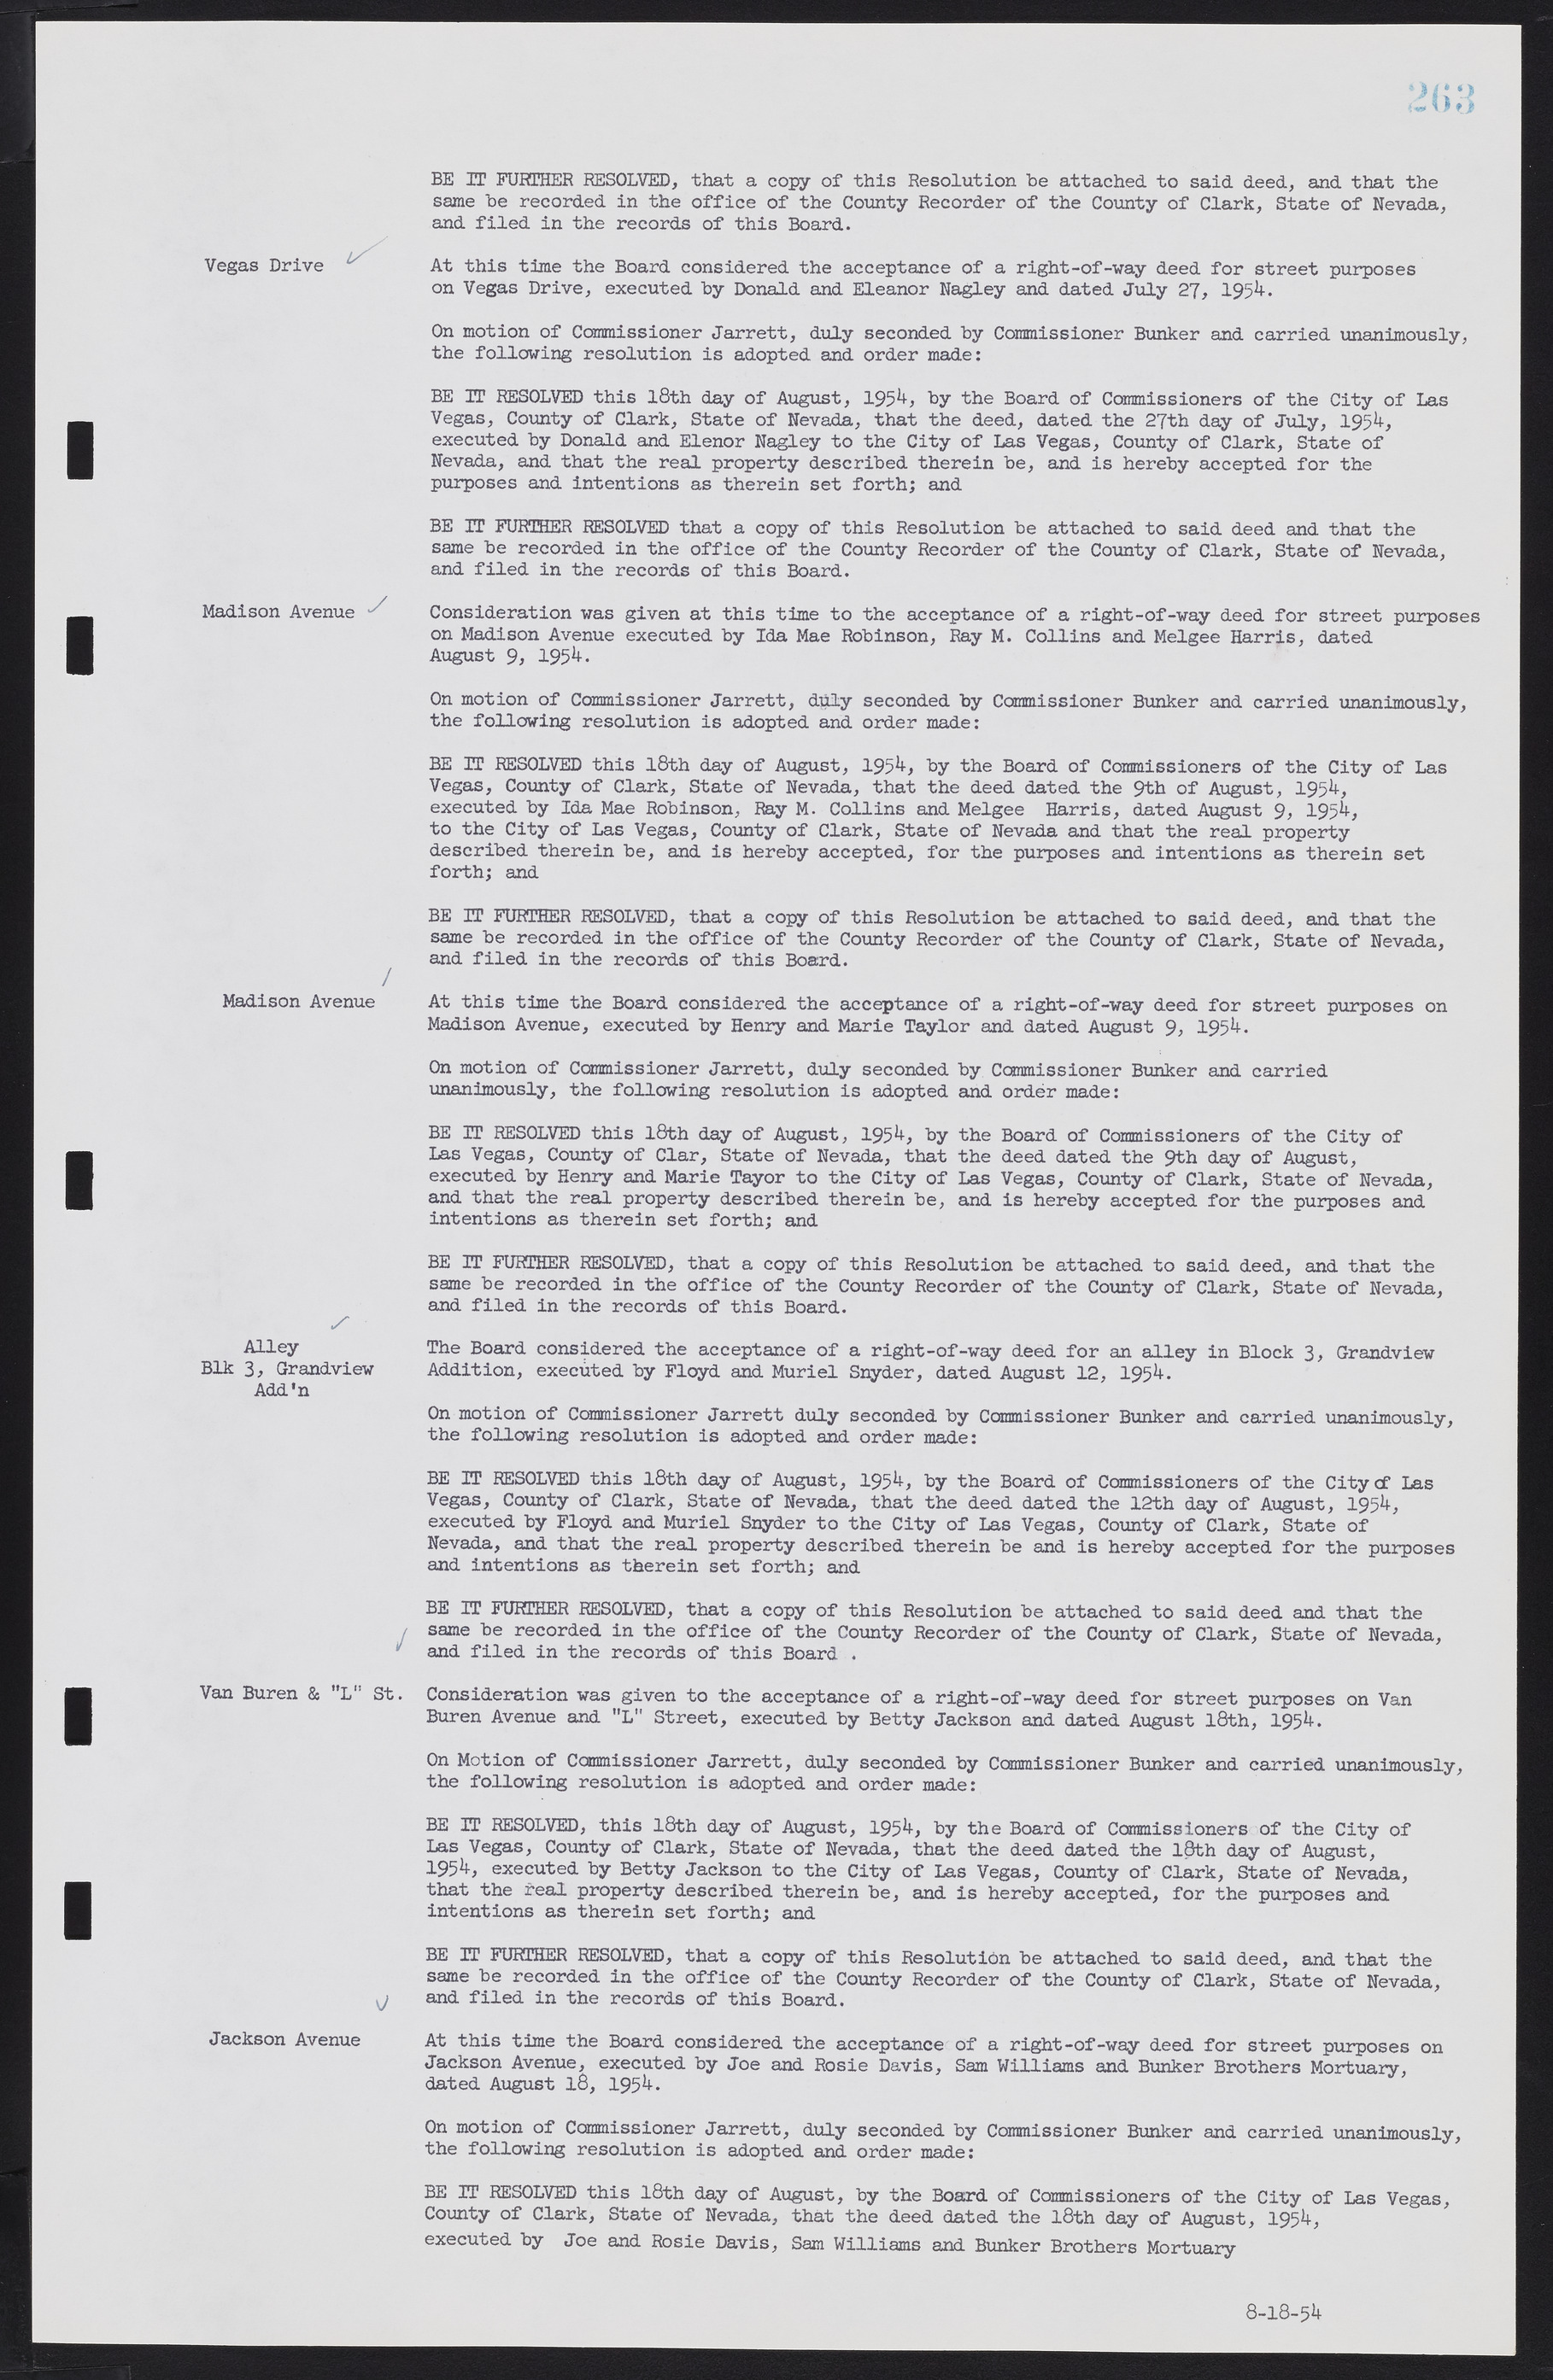 Las Vegas City Commission Minutes, February 17, 1954 to September 21, 1955, lvc000009-269